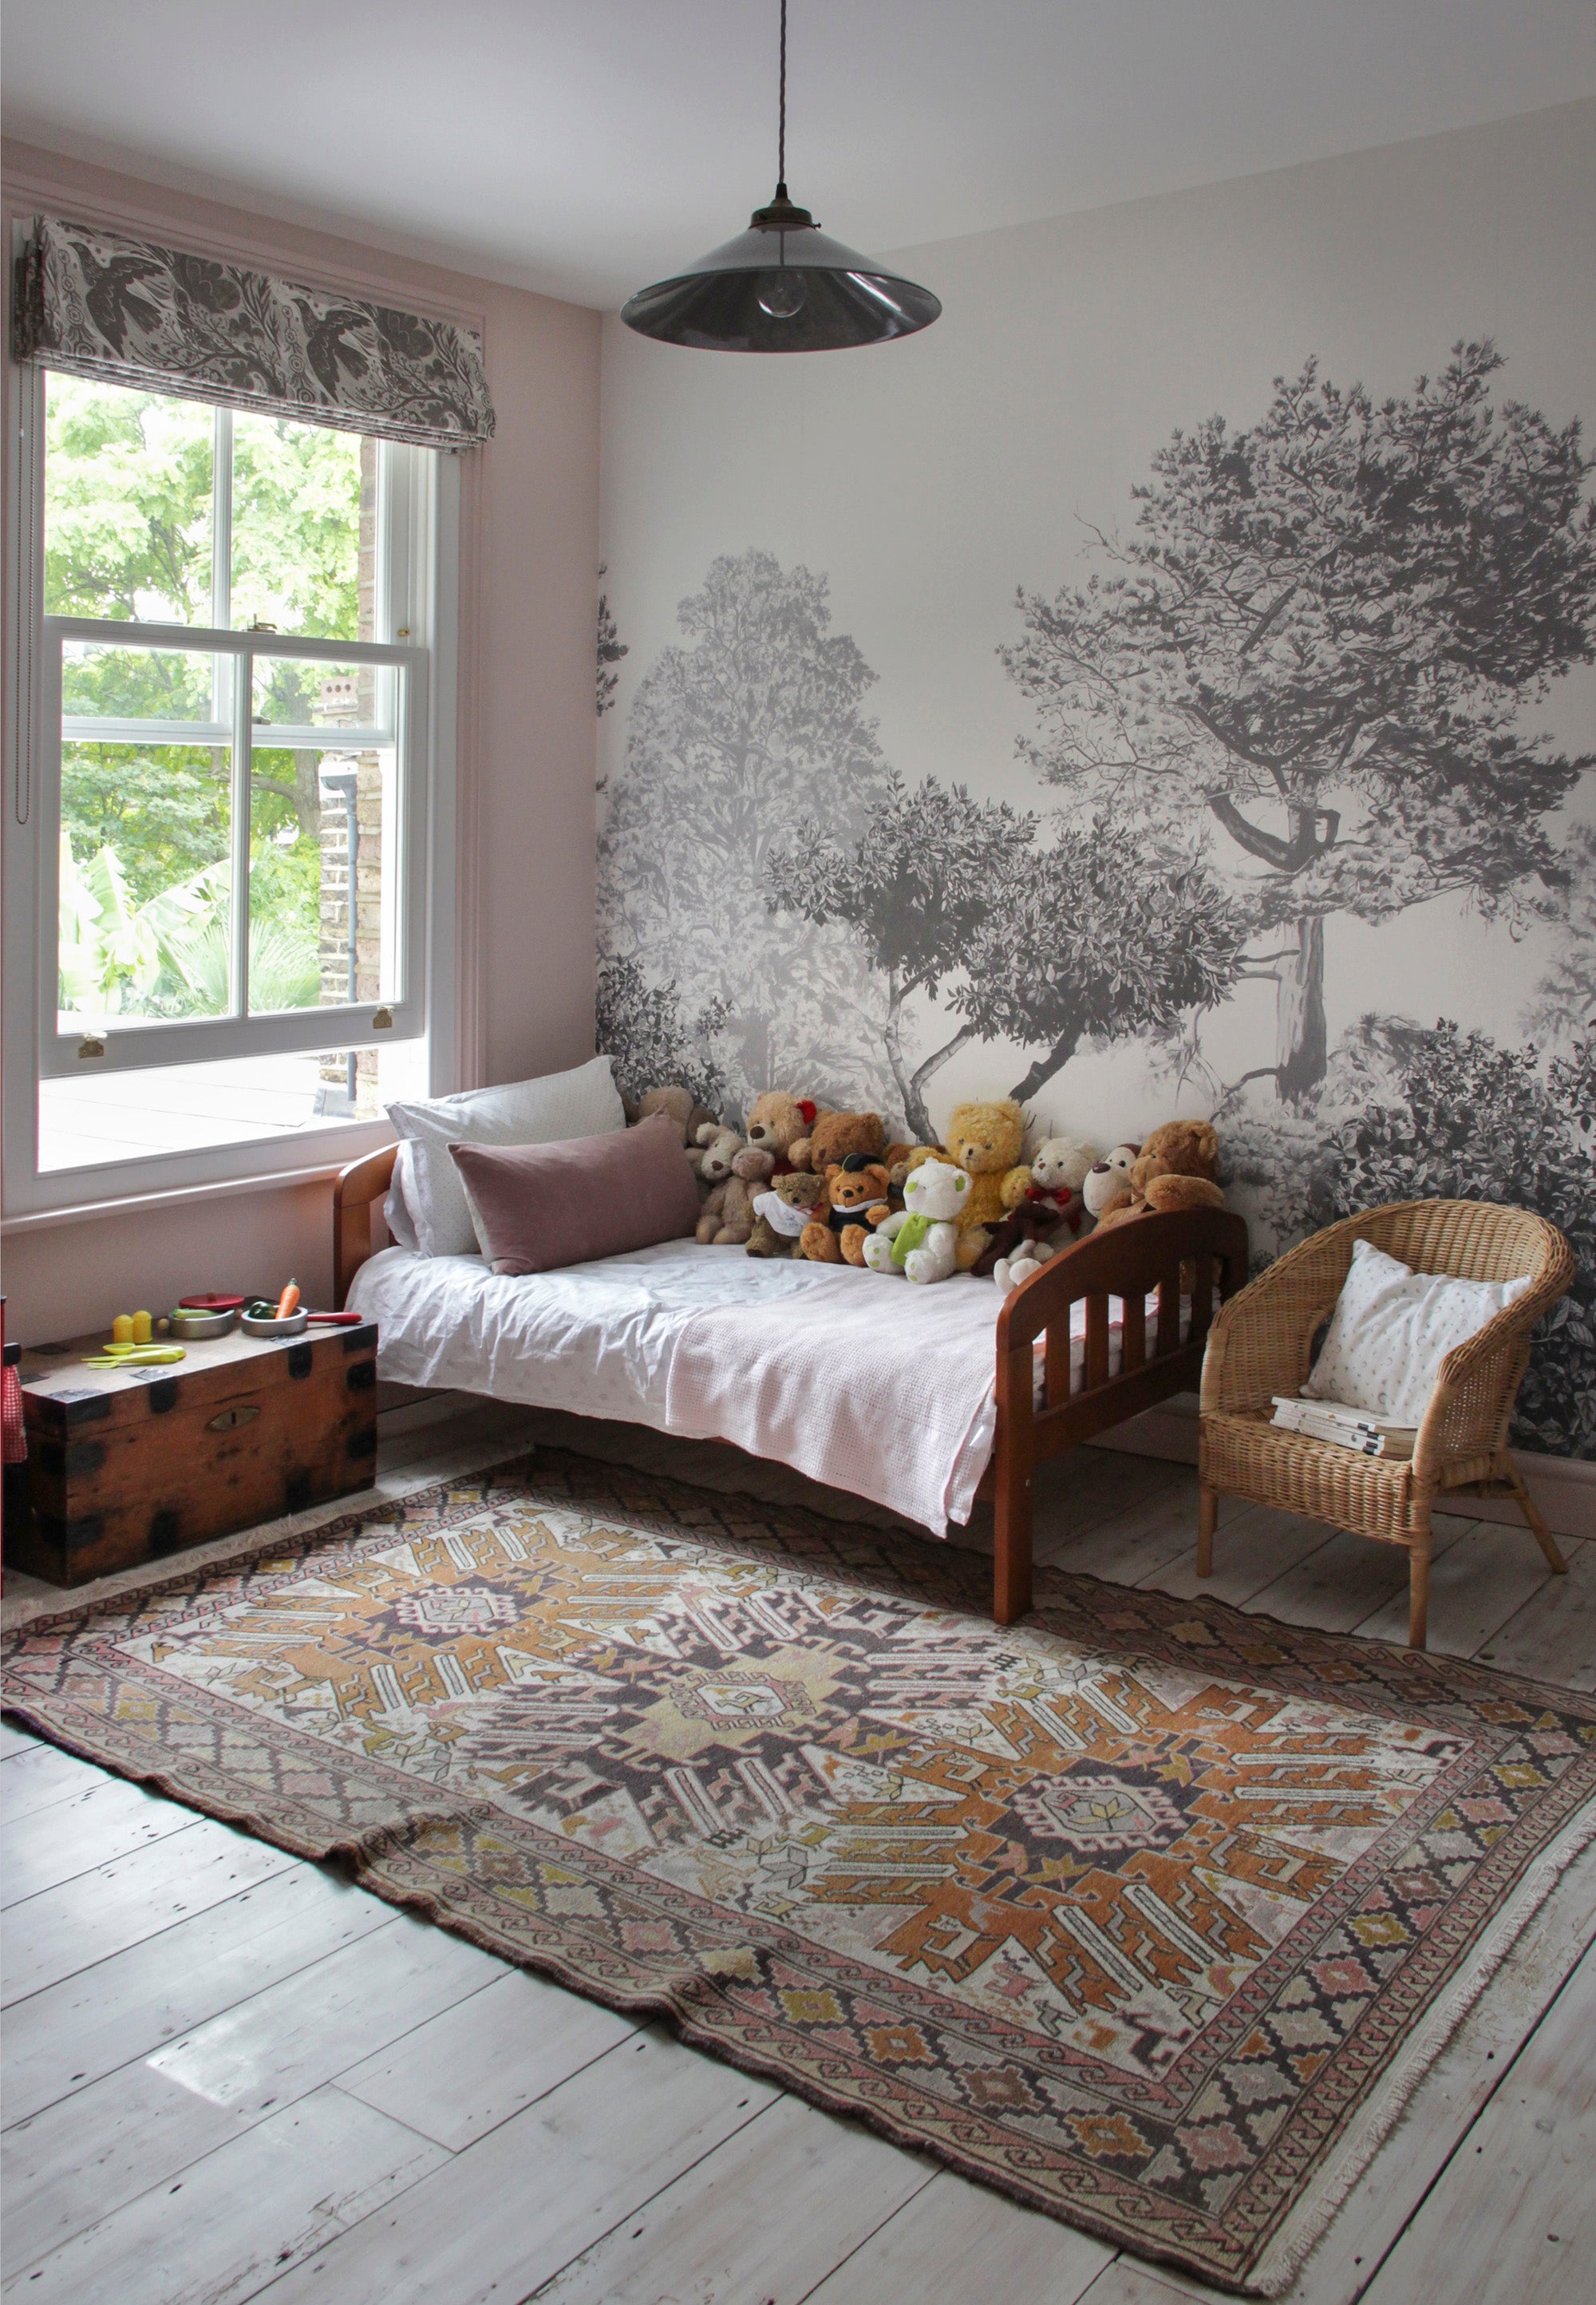 Creating a Sense of Home this Autumn: Q+A with Interior Designer Yoko Kloeden